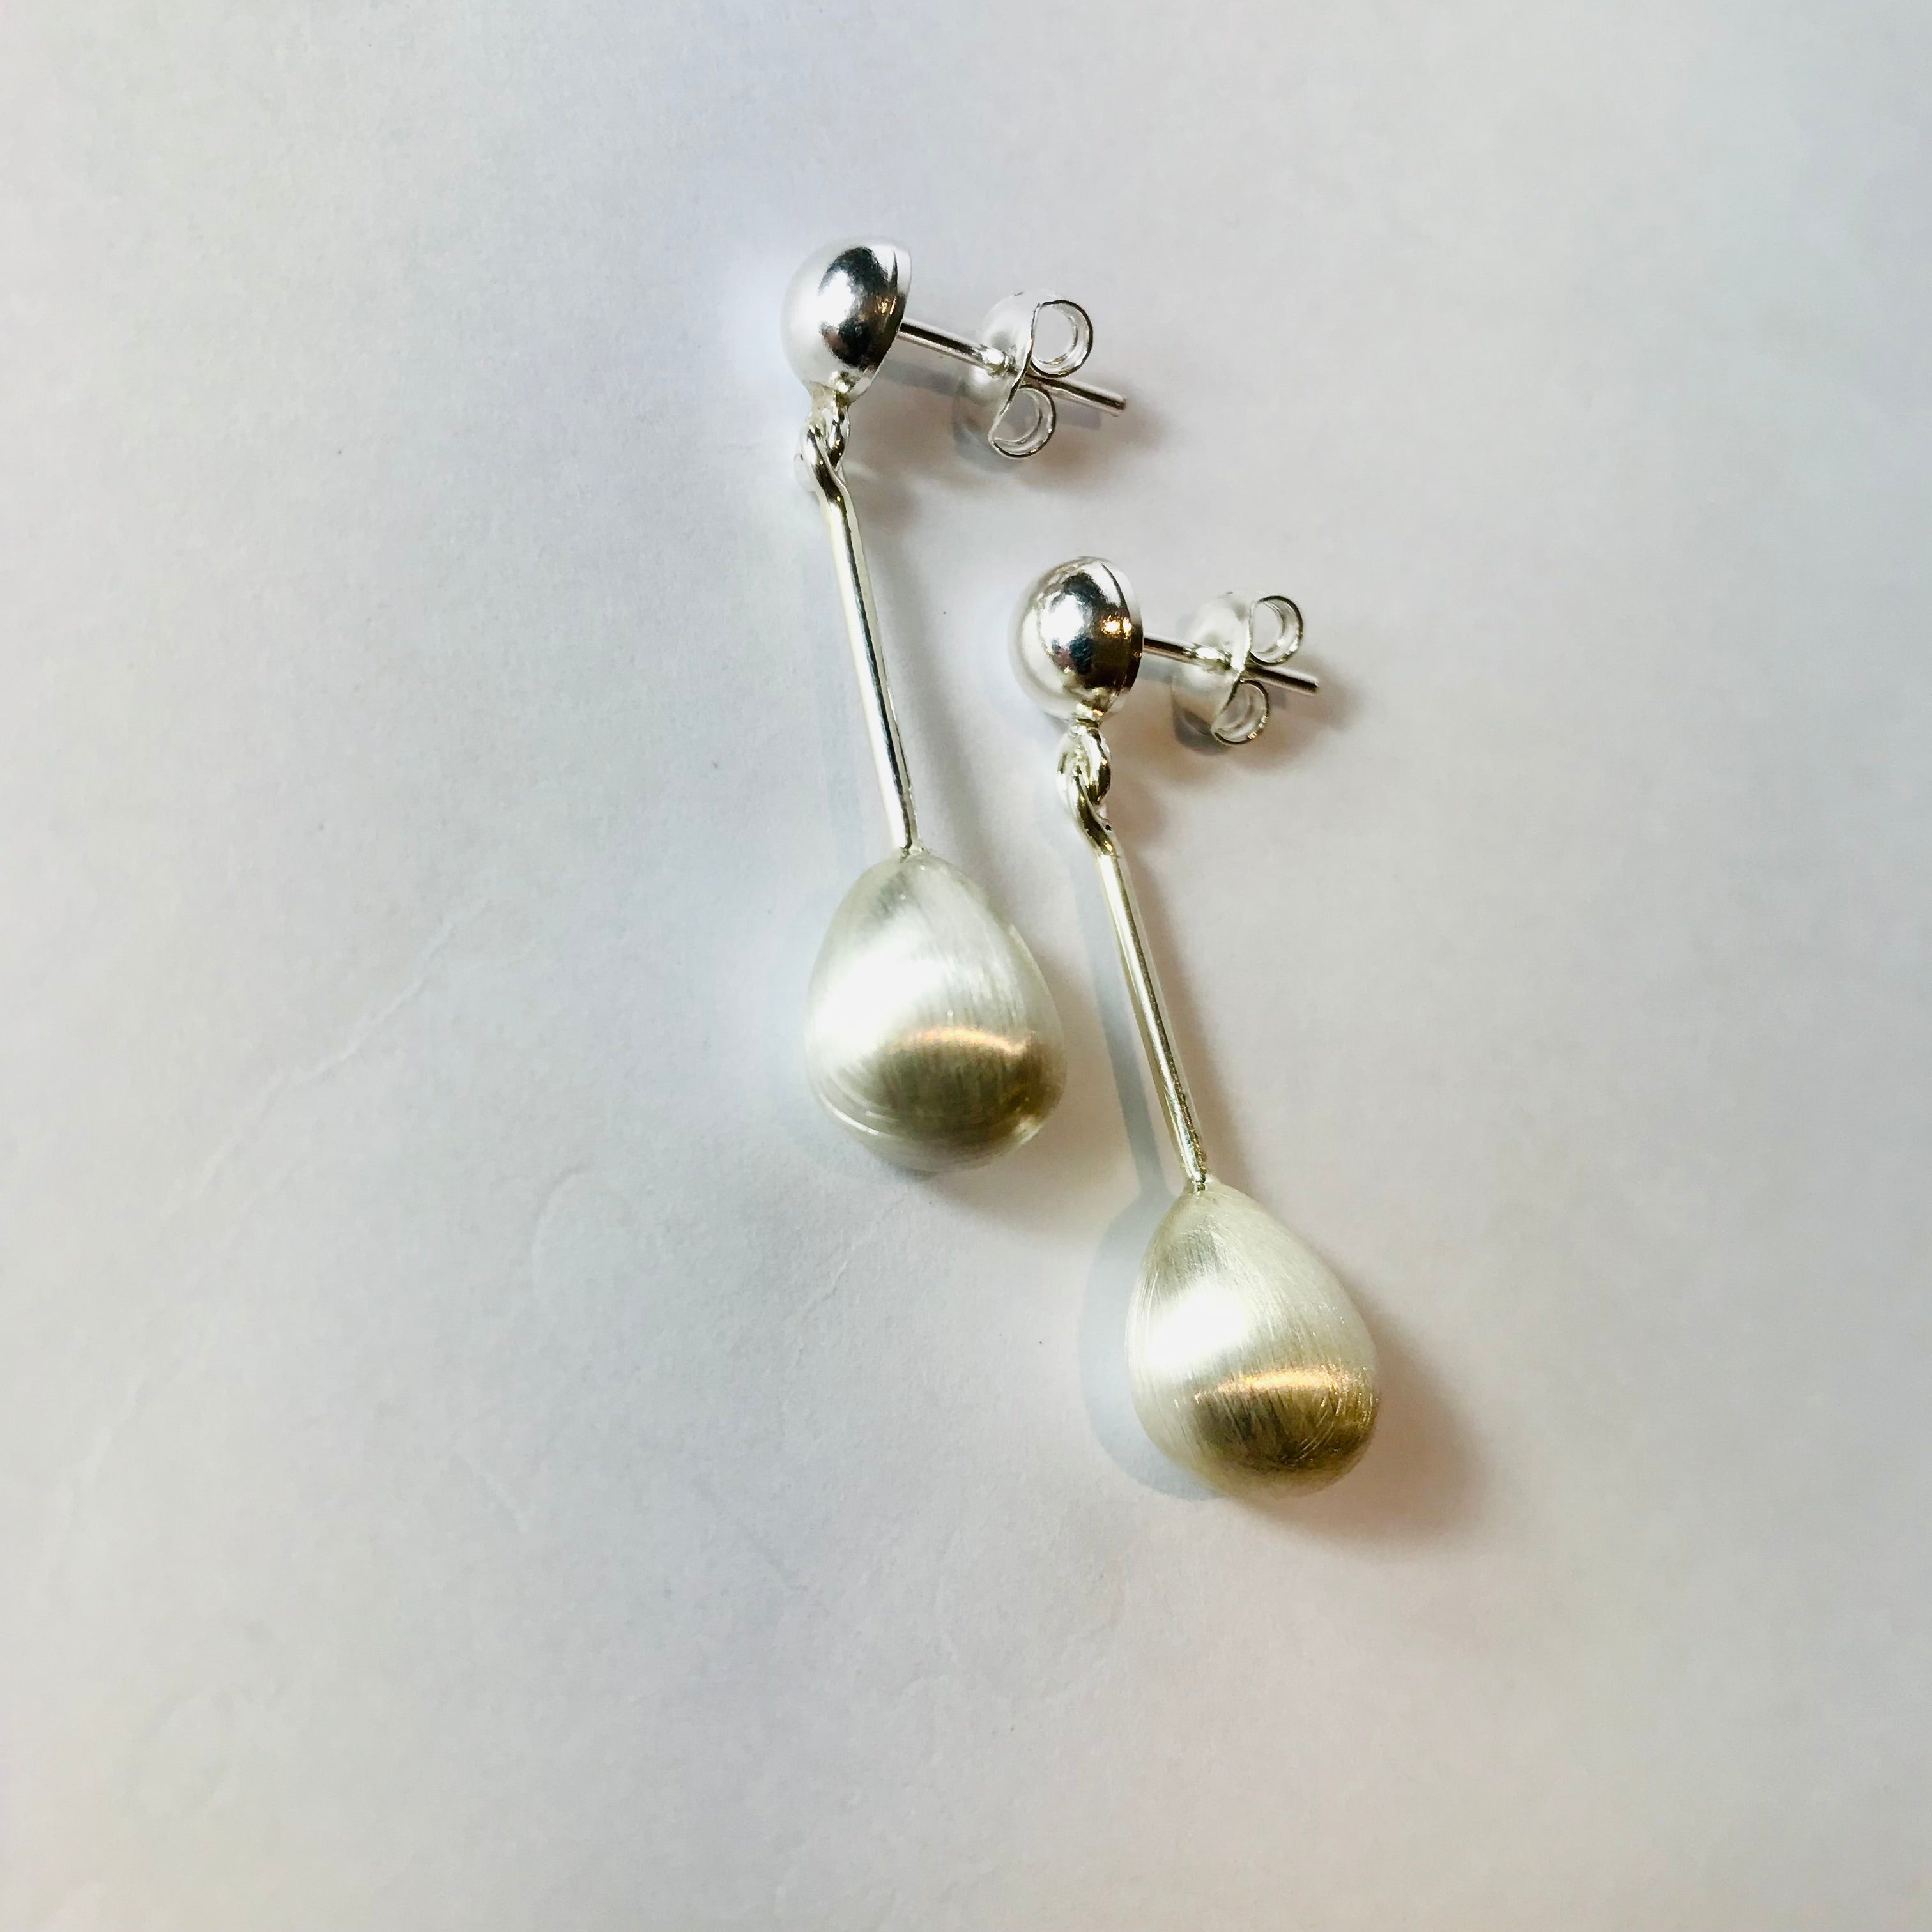 Matt Pebble Earrings - The Nancy Smillie Shop - Art, Jewellery & Designer Gifts Glasgow